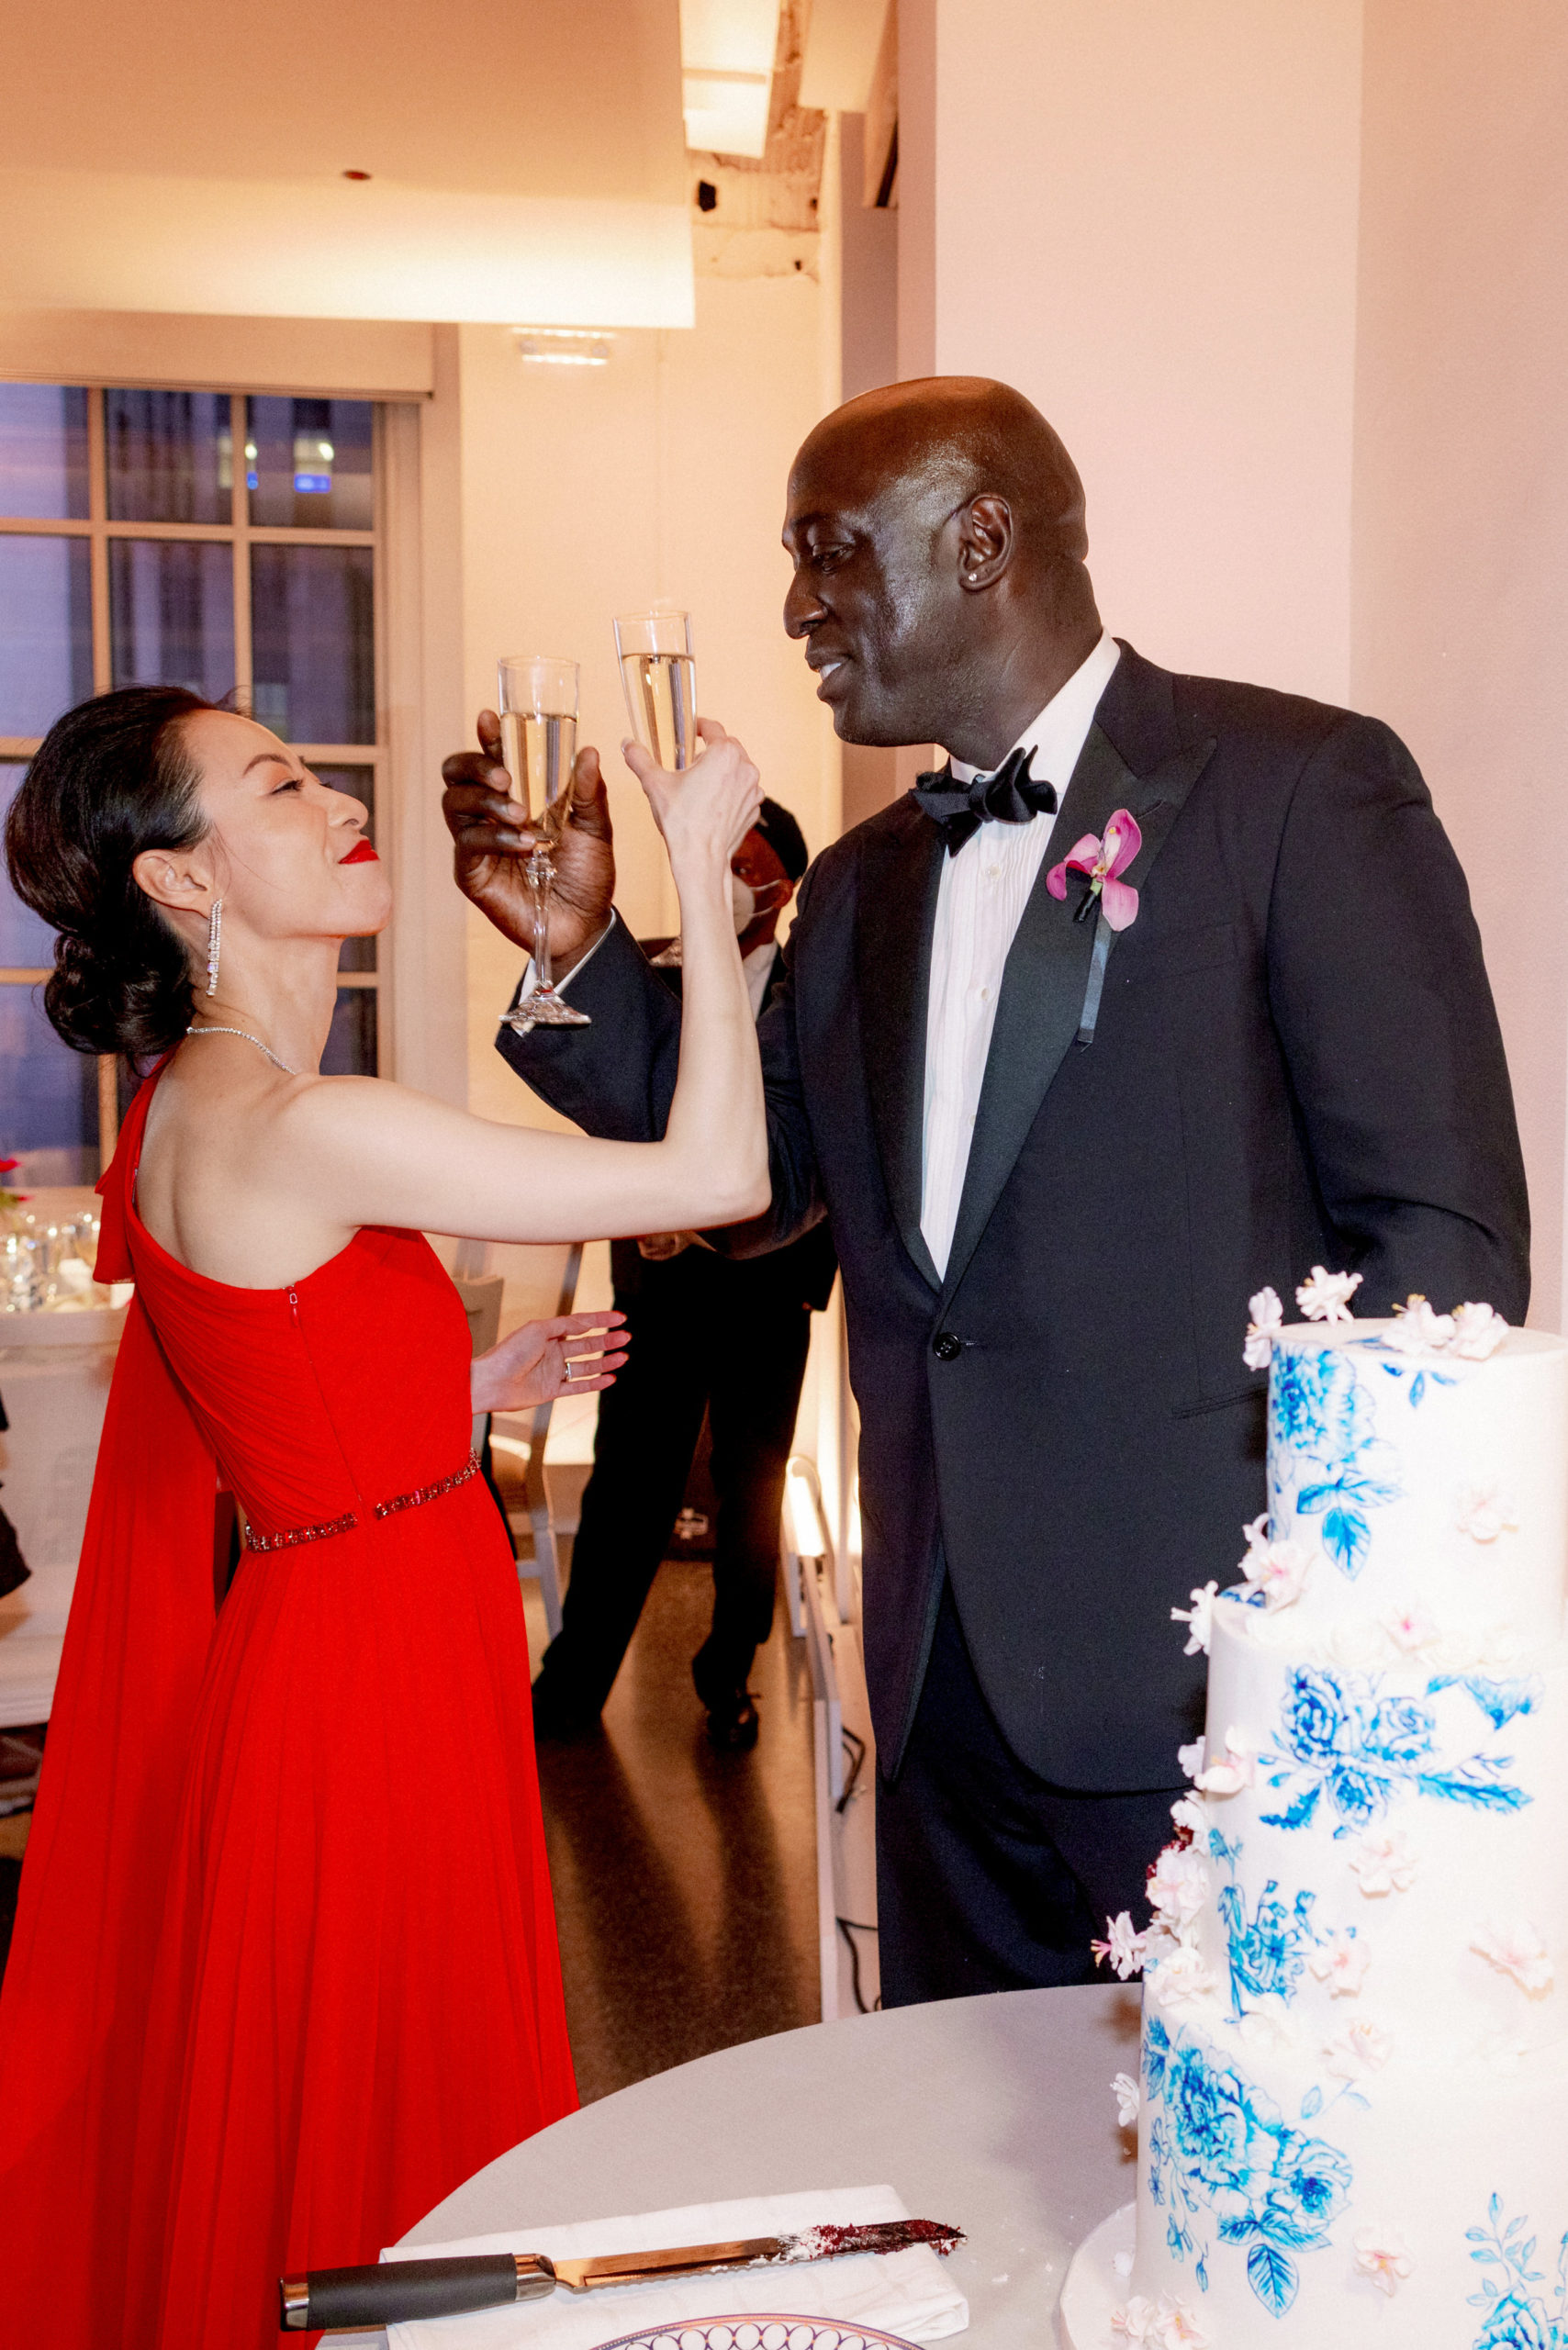 The newly-weds are doing a toast beside their wedding cake. Luxury wedding cake image by Jenny Fu Studio NYC